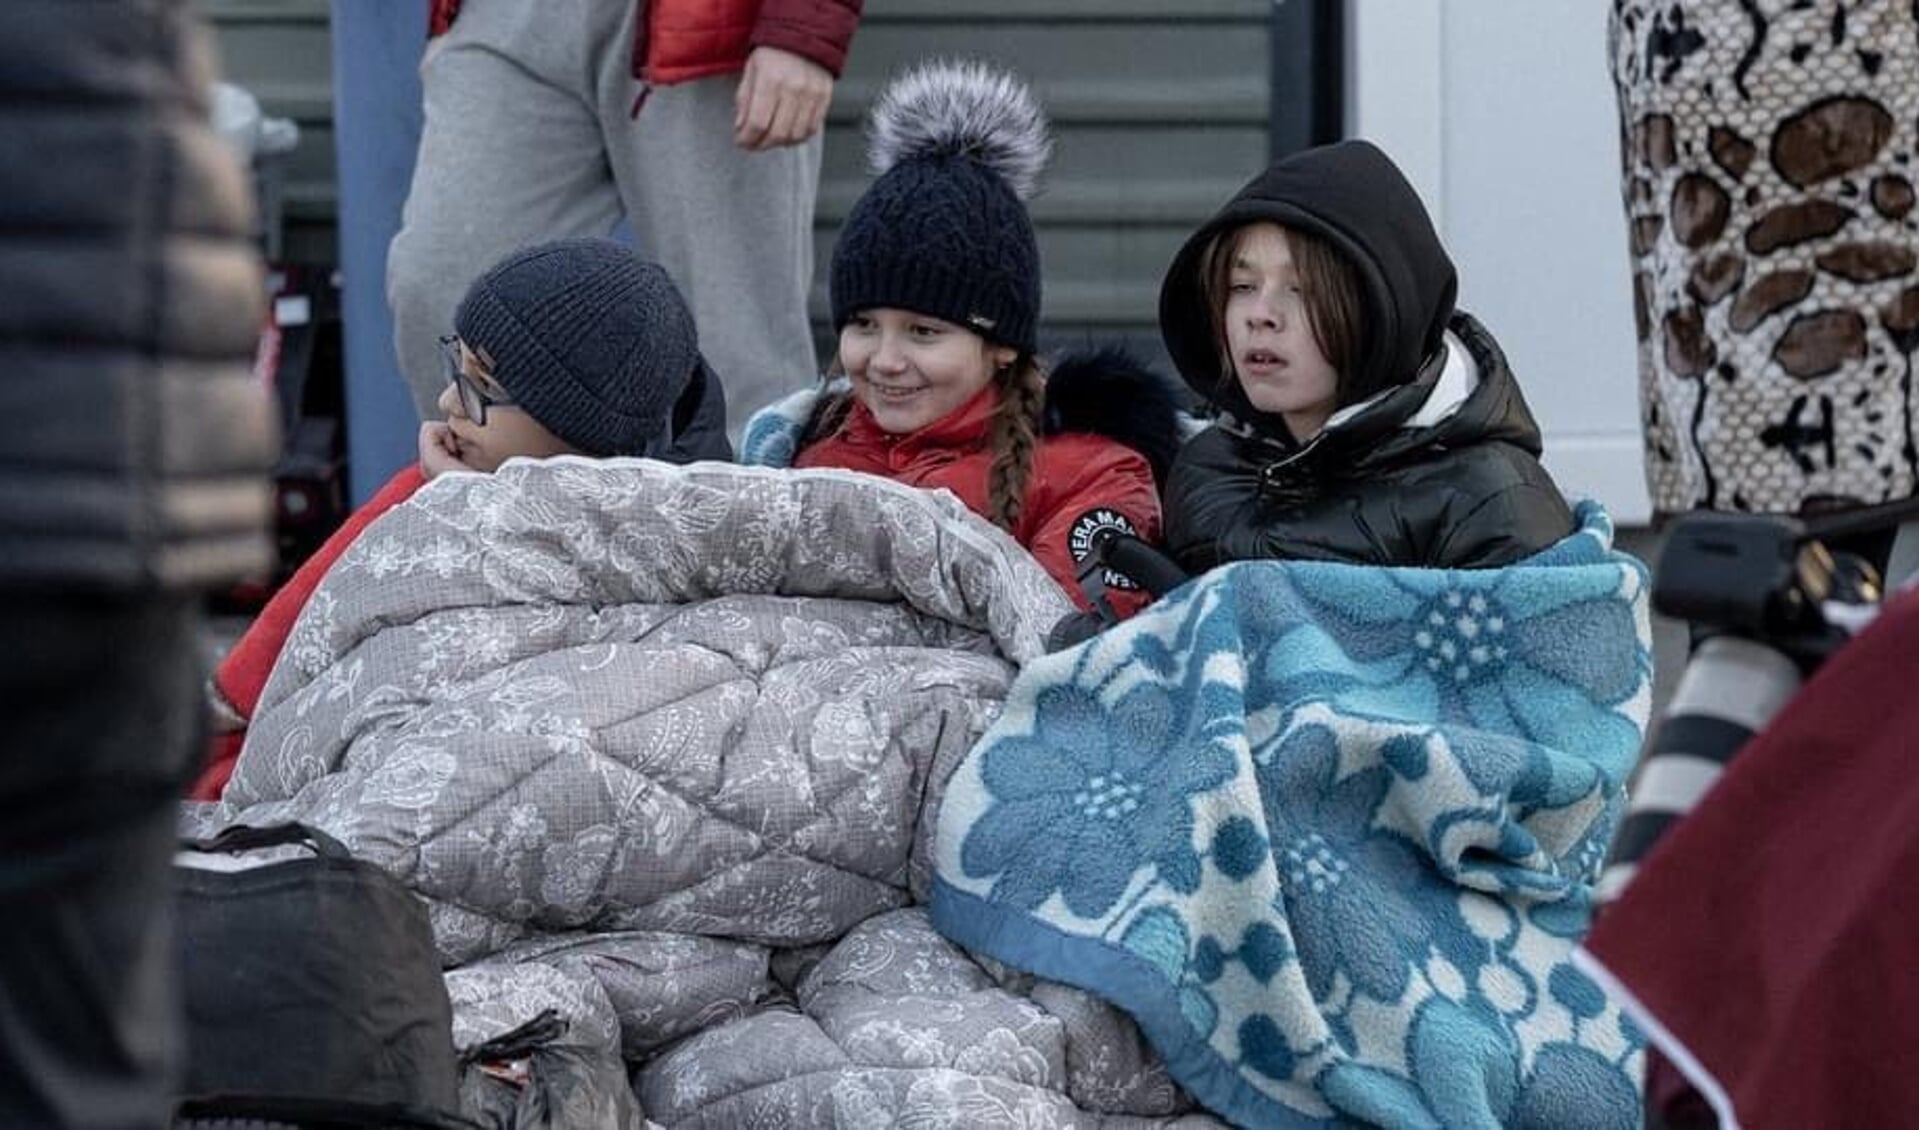 In Oekraïne is grote behoefte aan dekens, slaapzakken en dekbedden. 